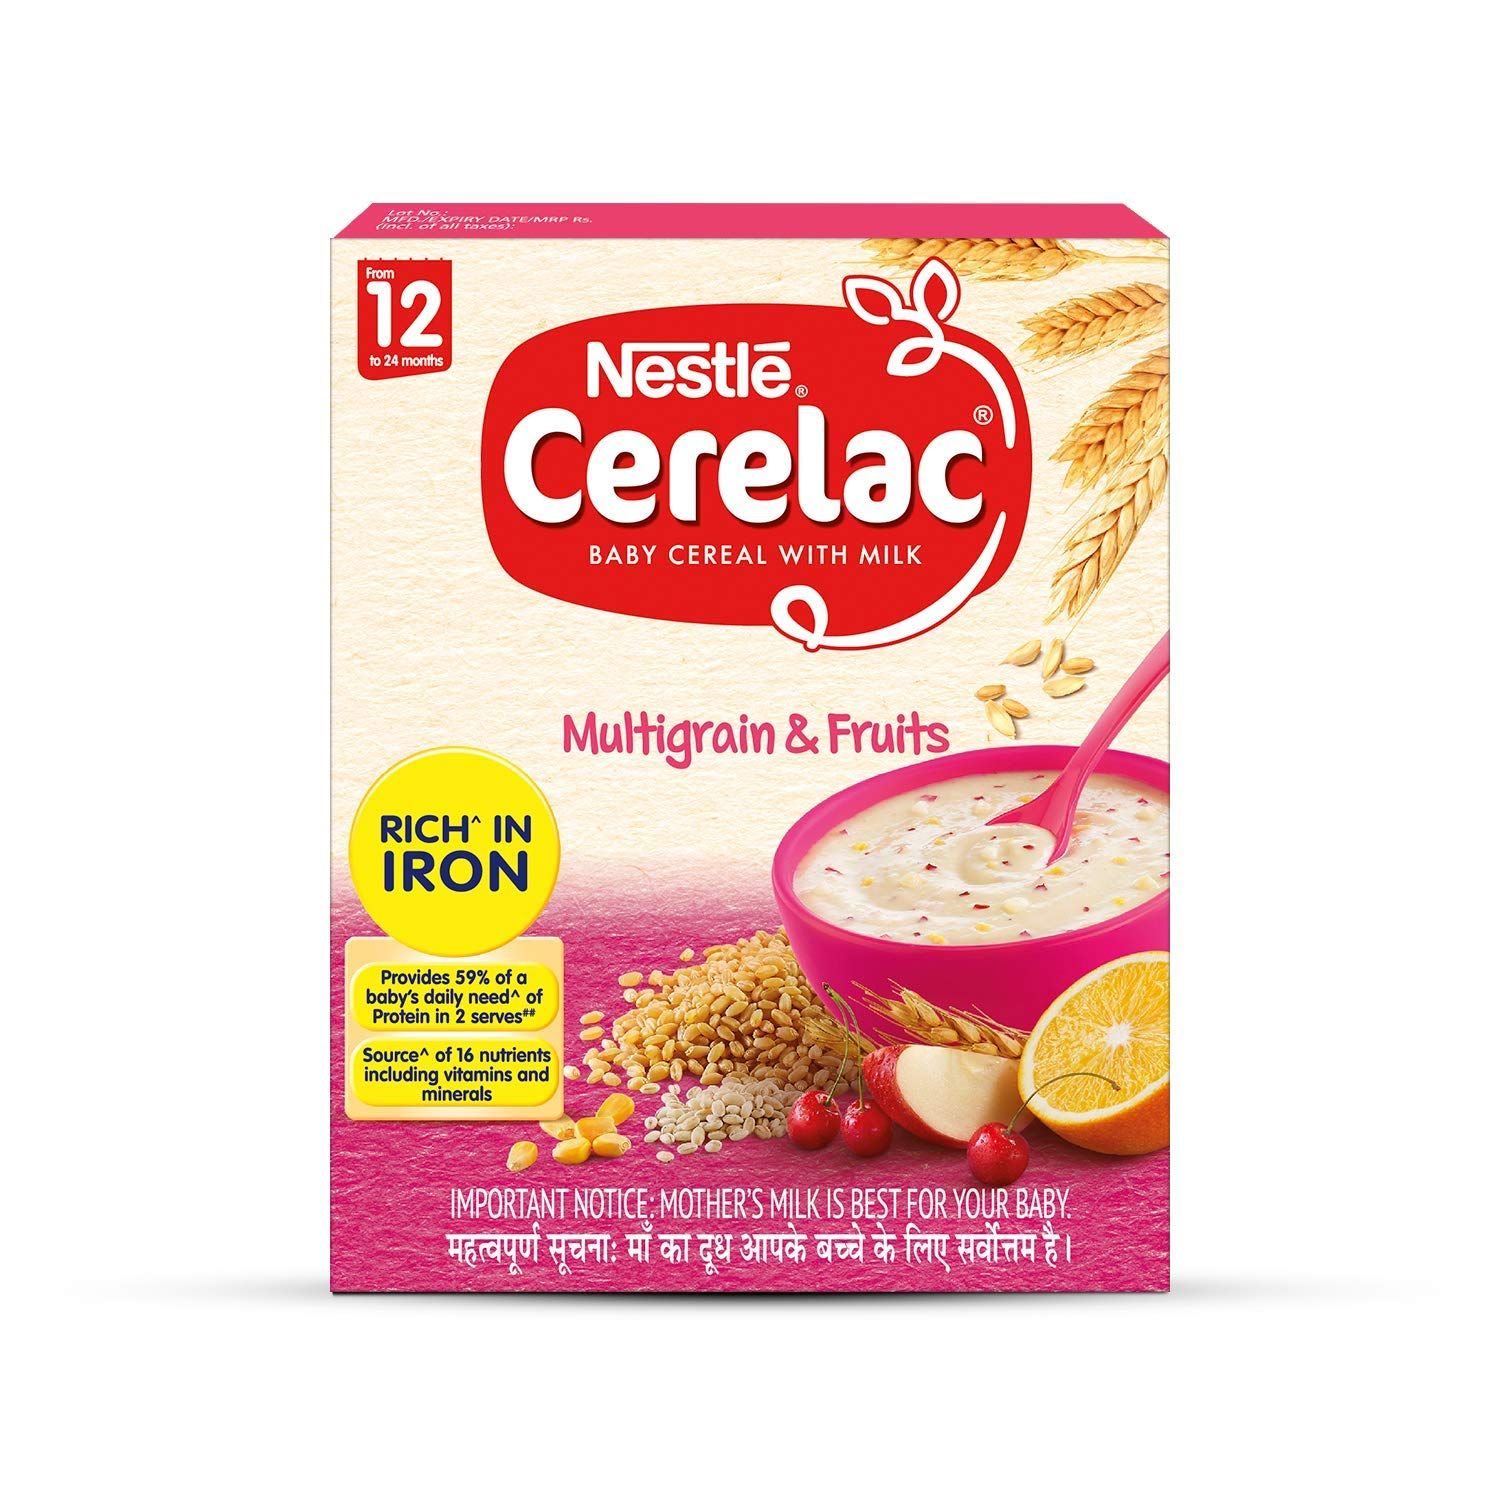 Nestle Cerelac Multigraun & Fruits Image